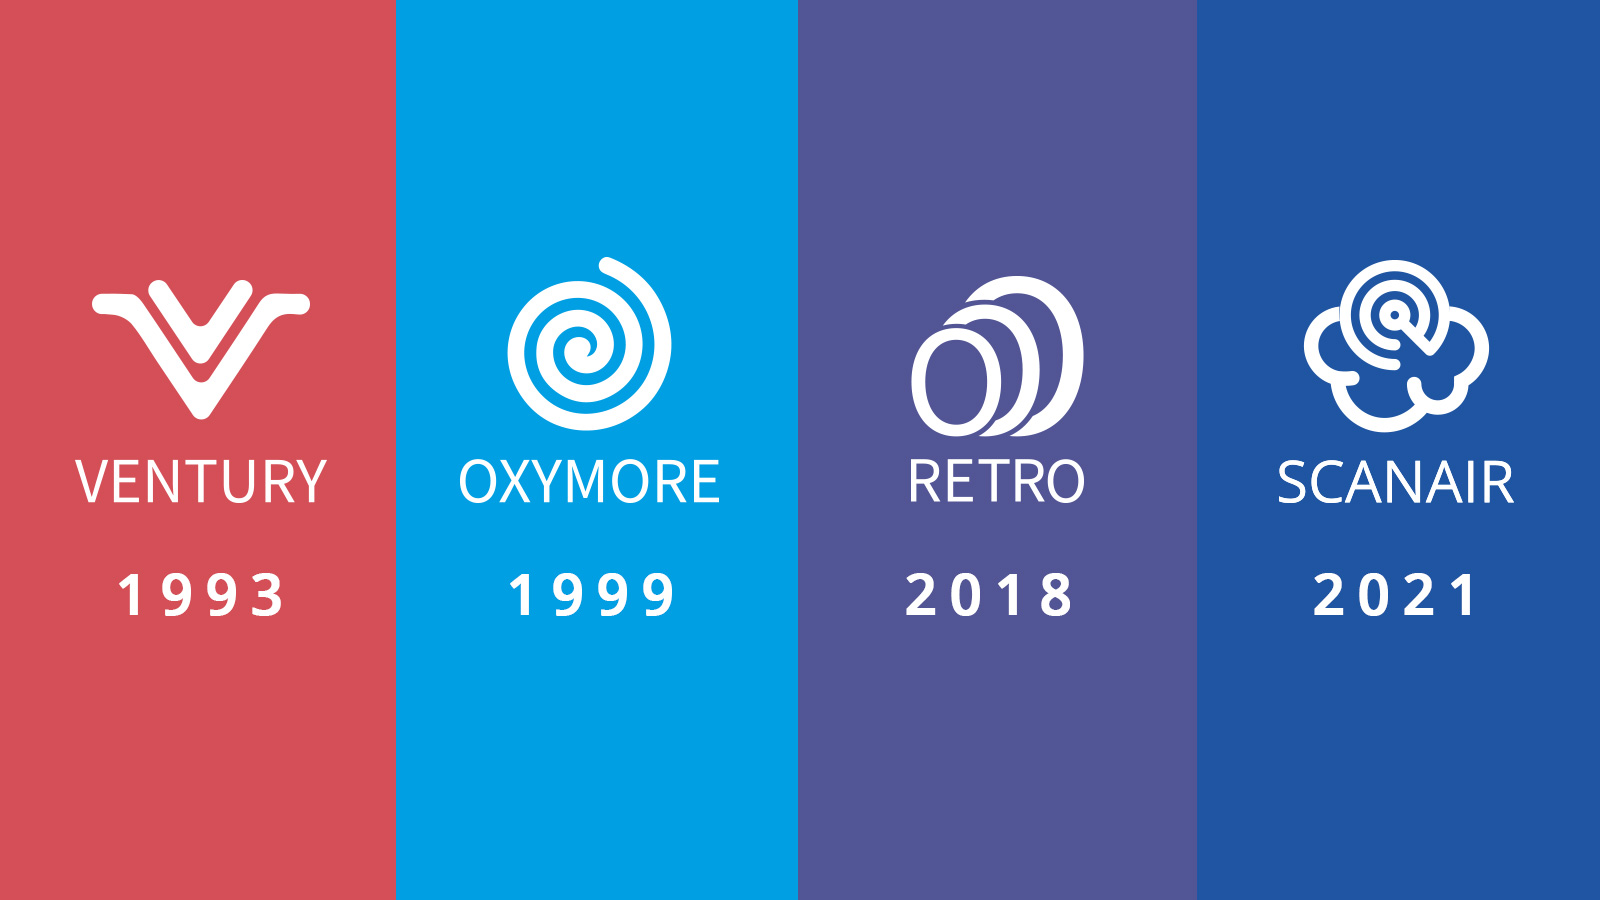 ventury:1993, oxymore:1999, retro:2018, scanair:2021